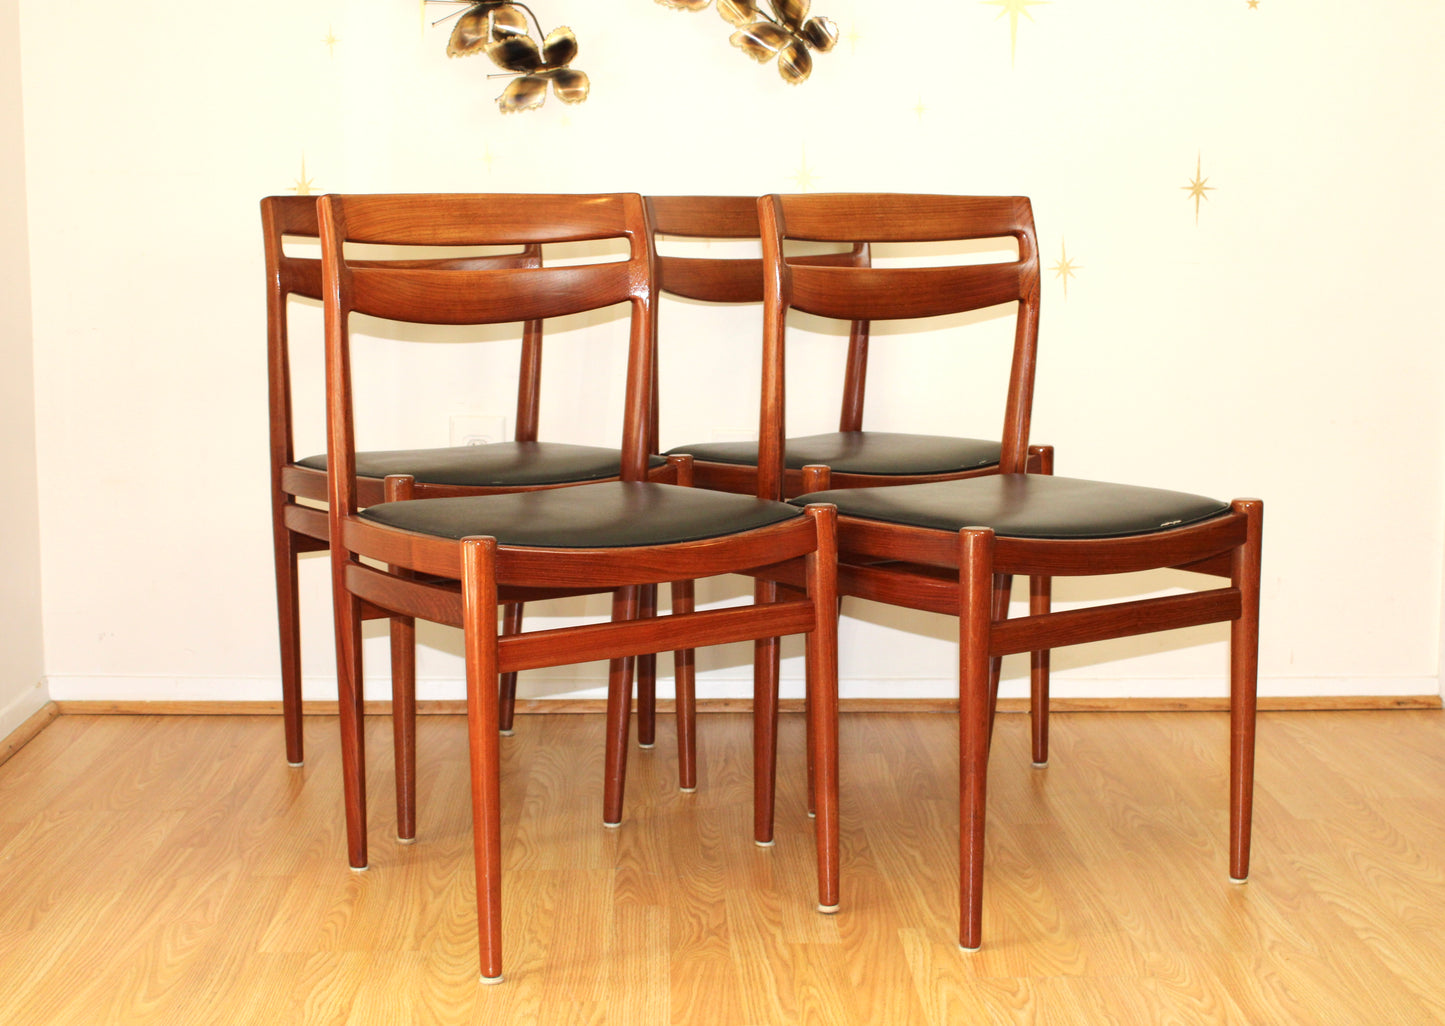 Set of 4 Norwegian Dining Chair by Bruskbo